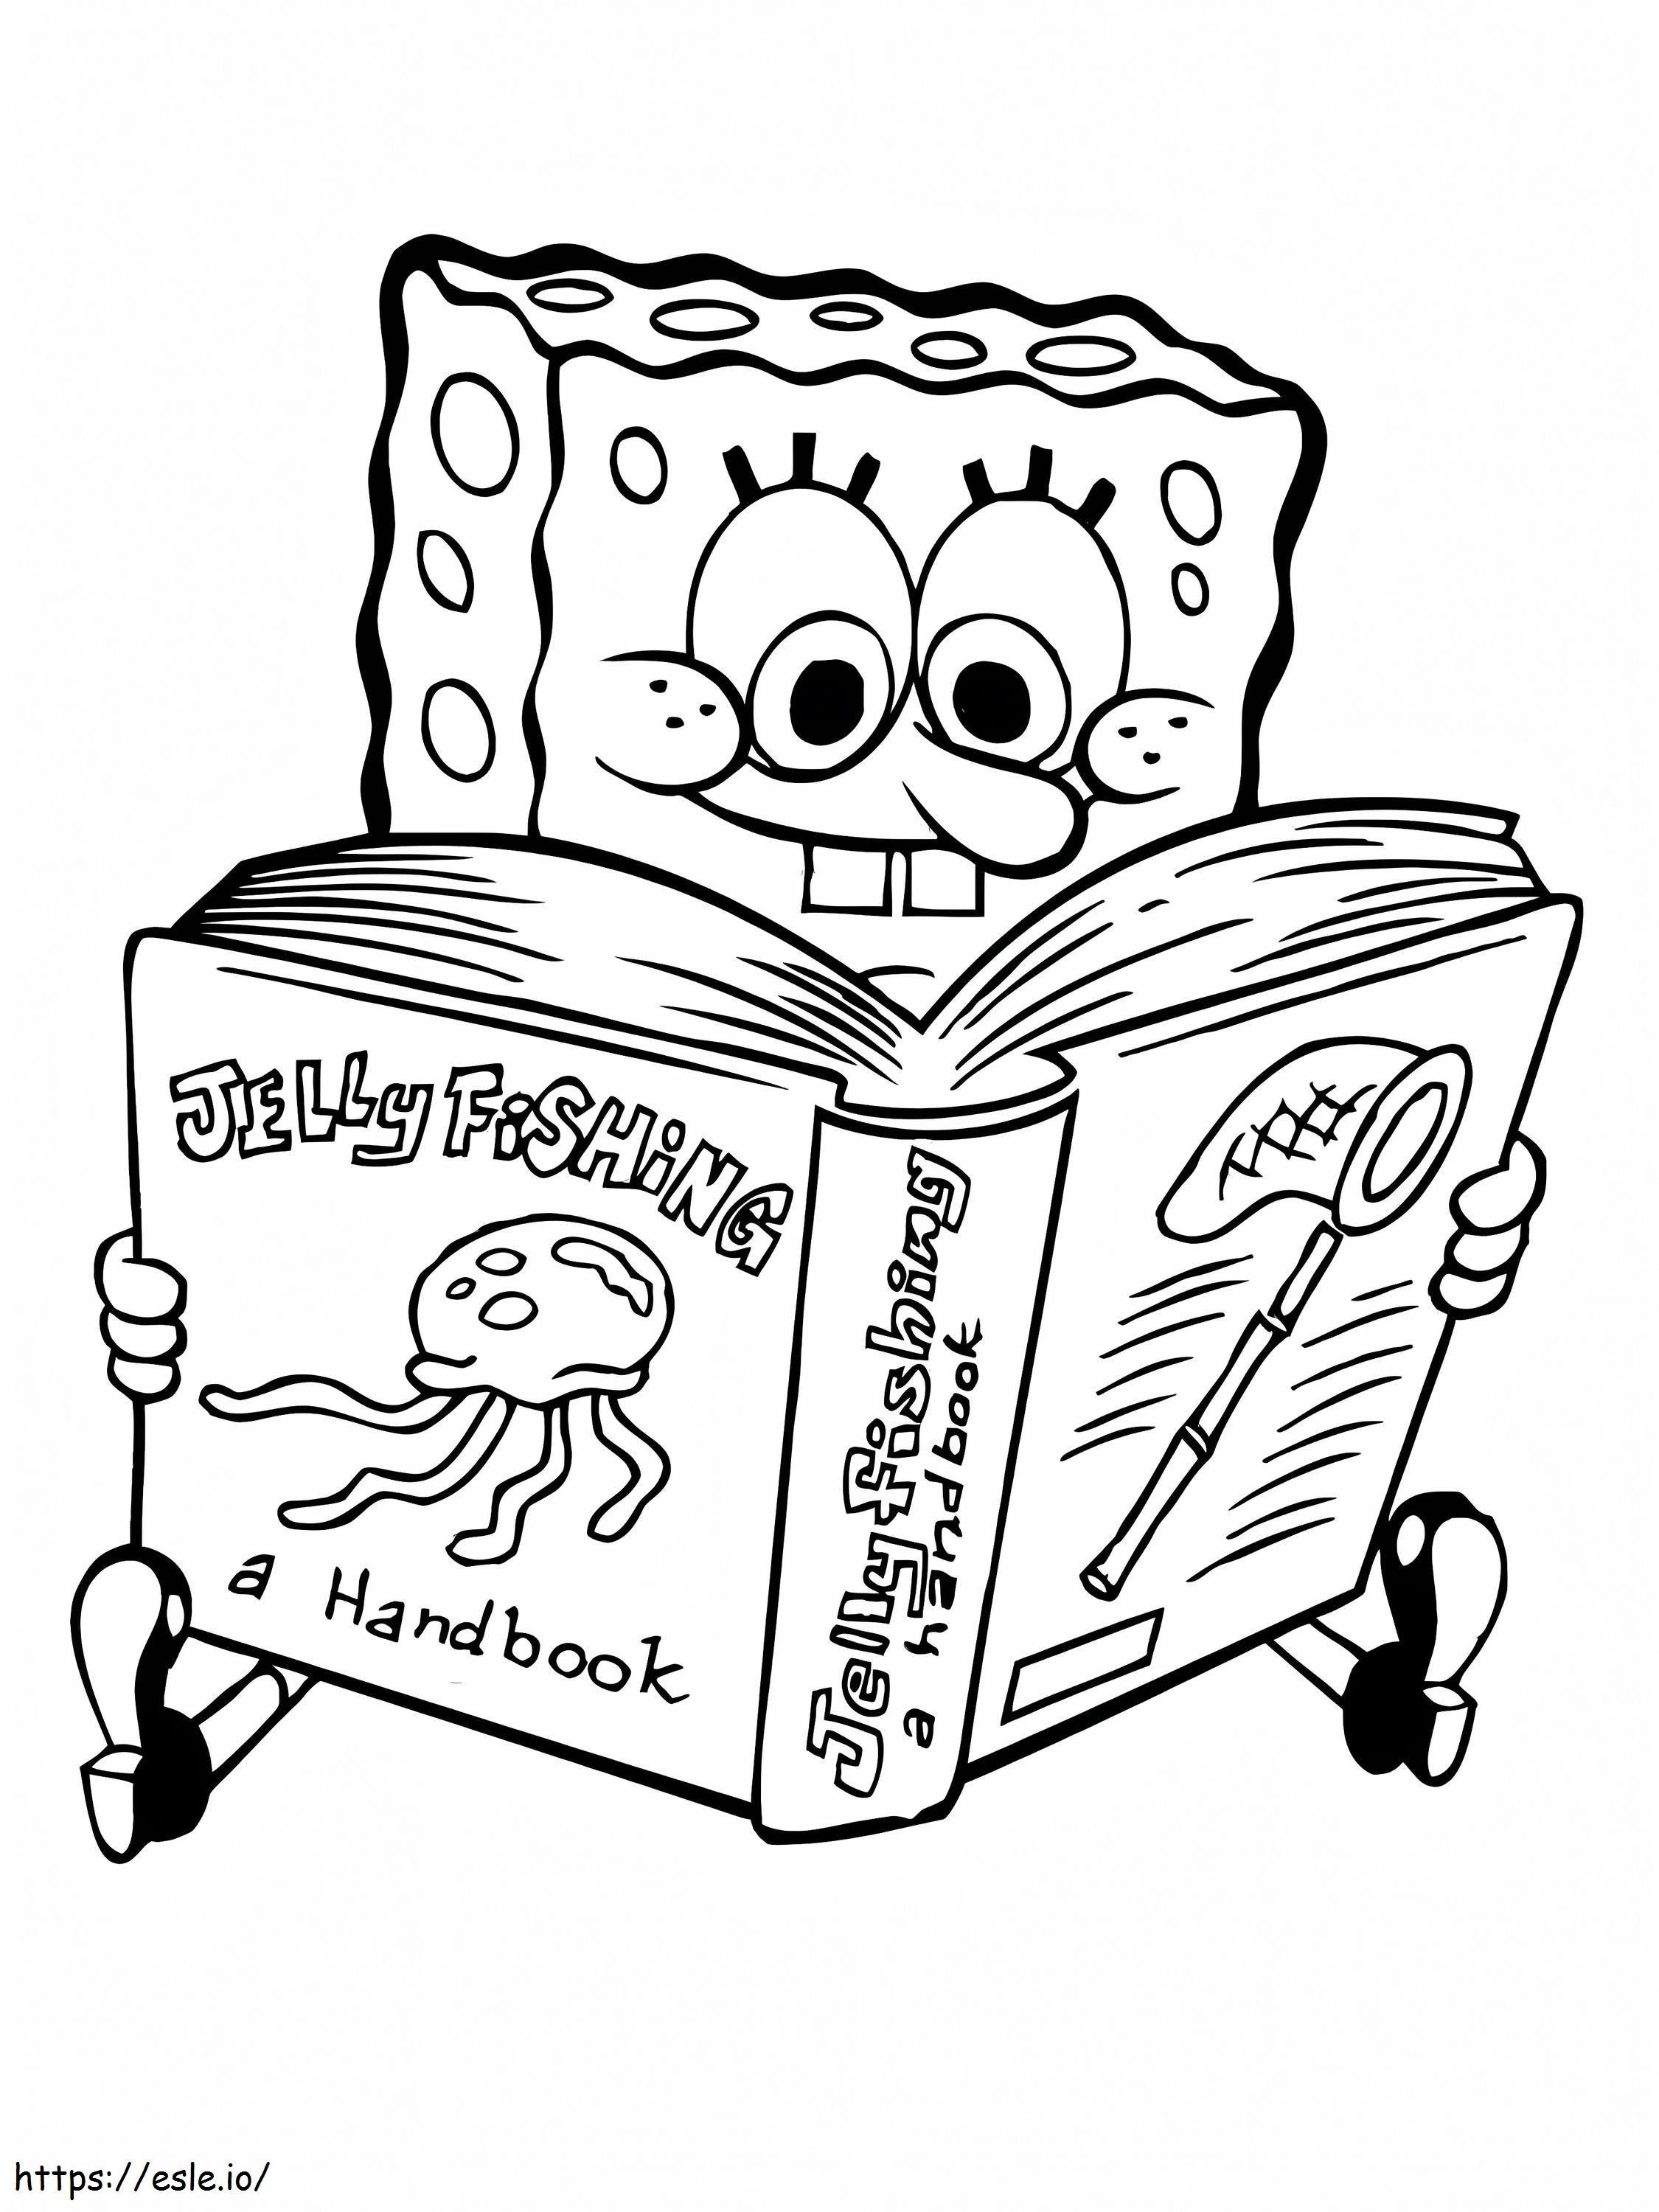 Spongebob leesboek kleurplaat kleurplaat